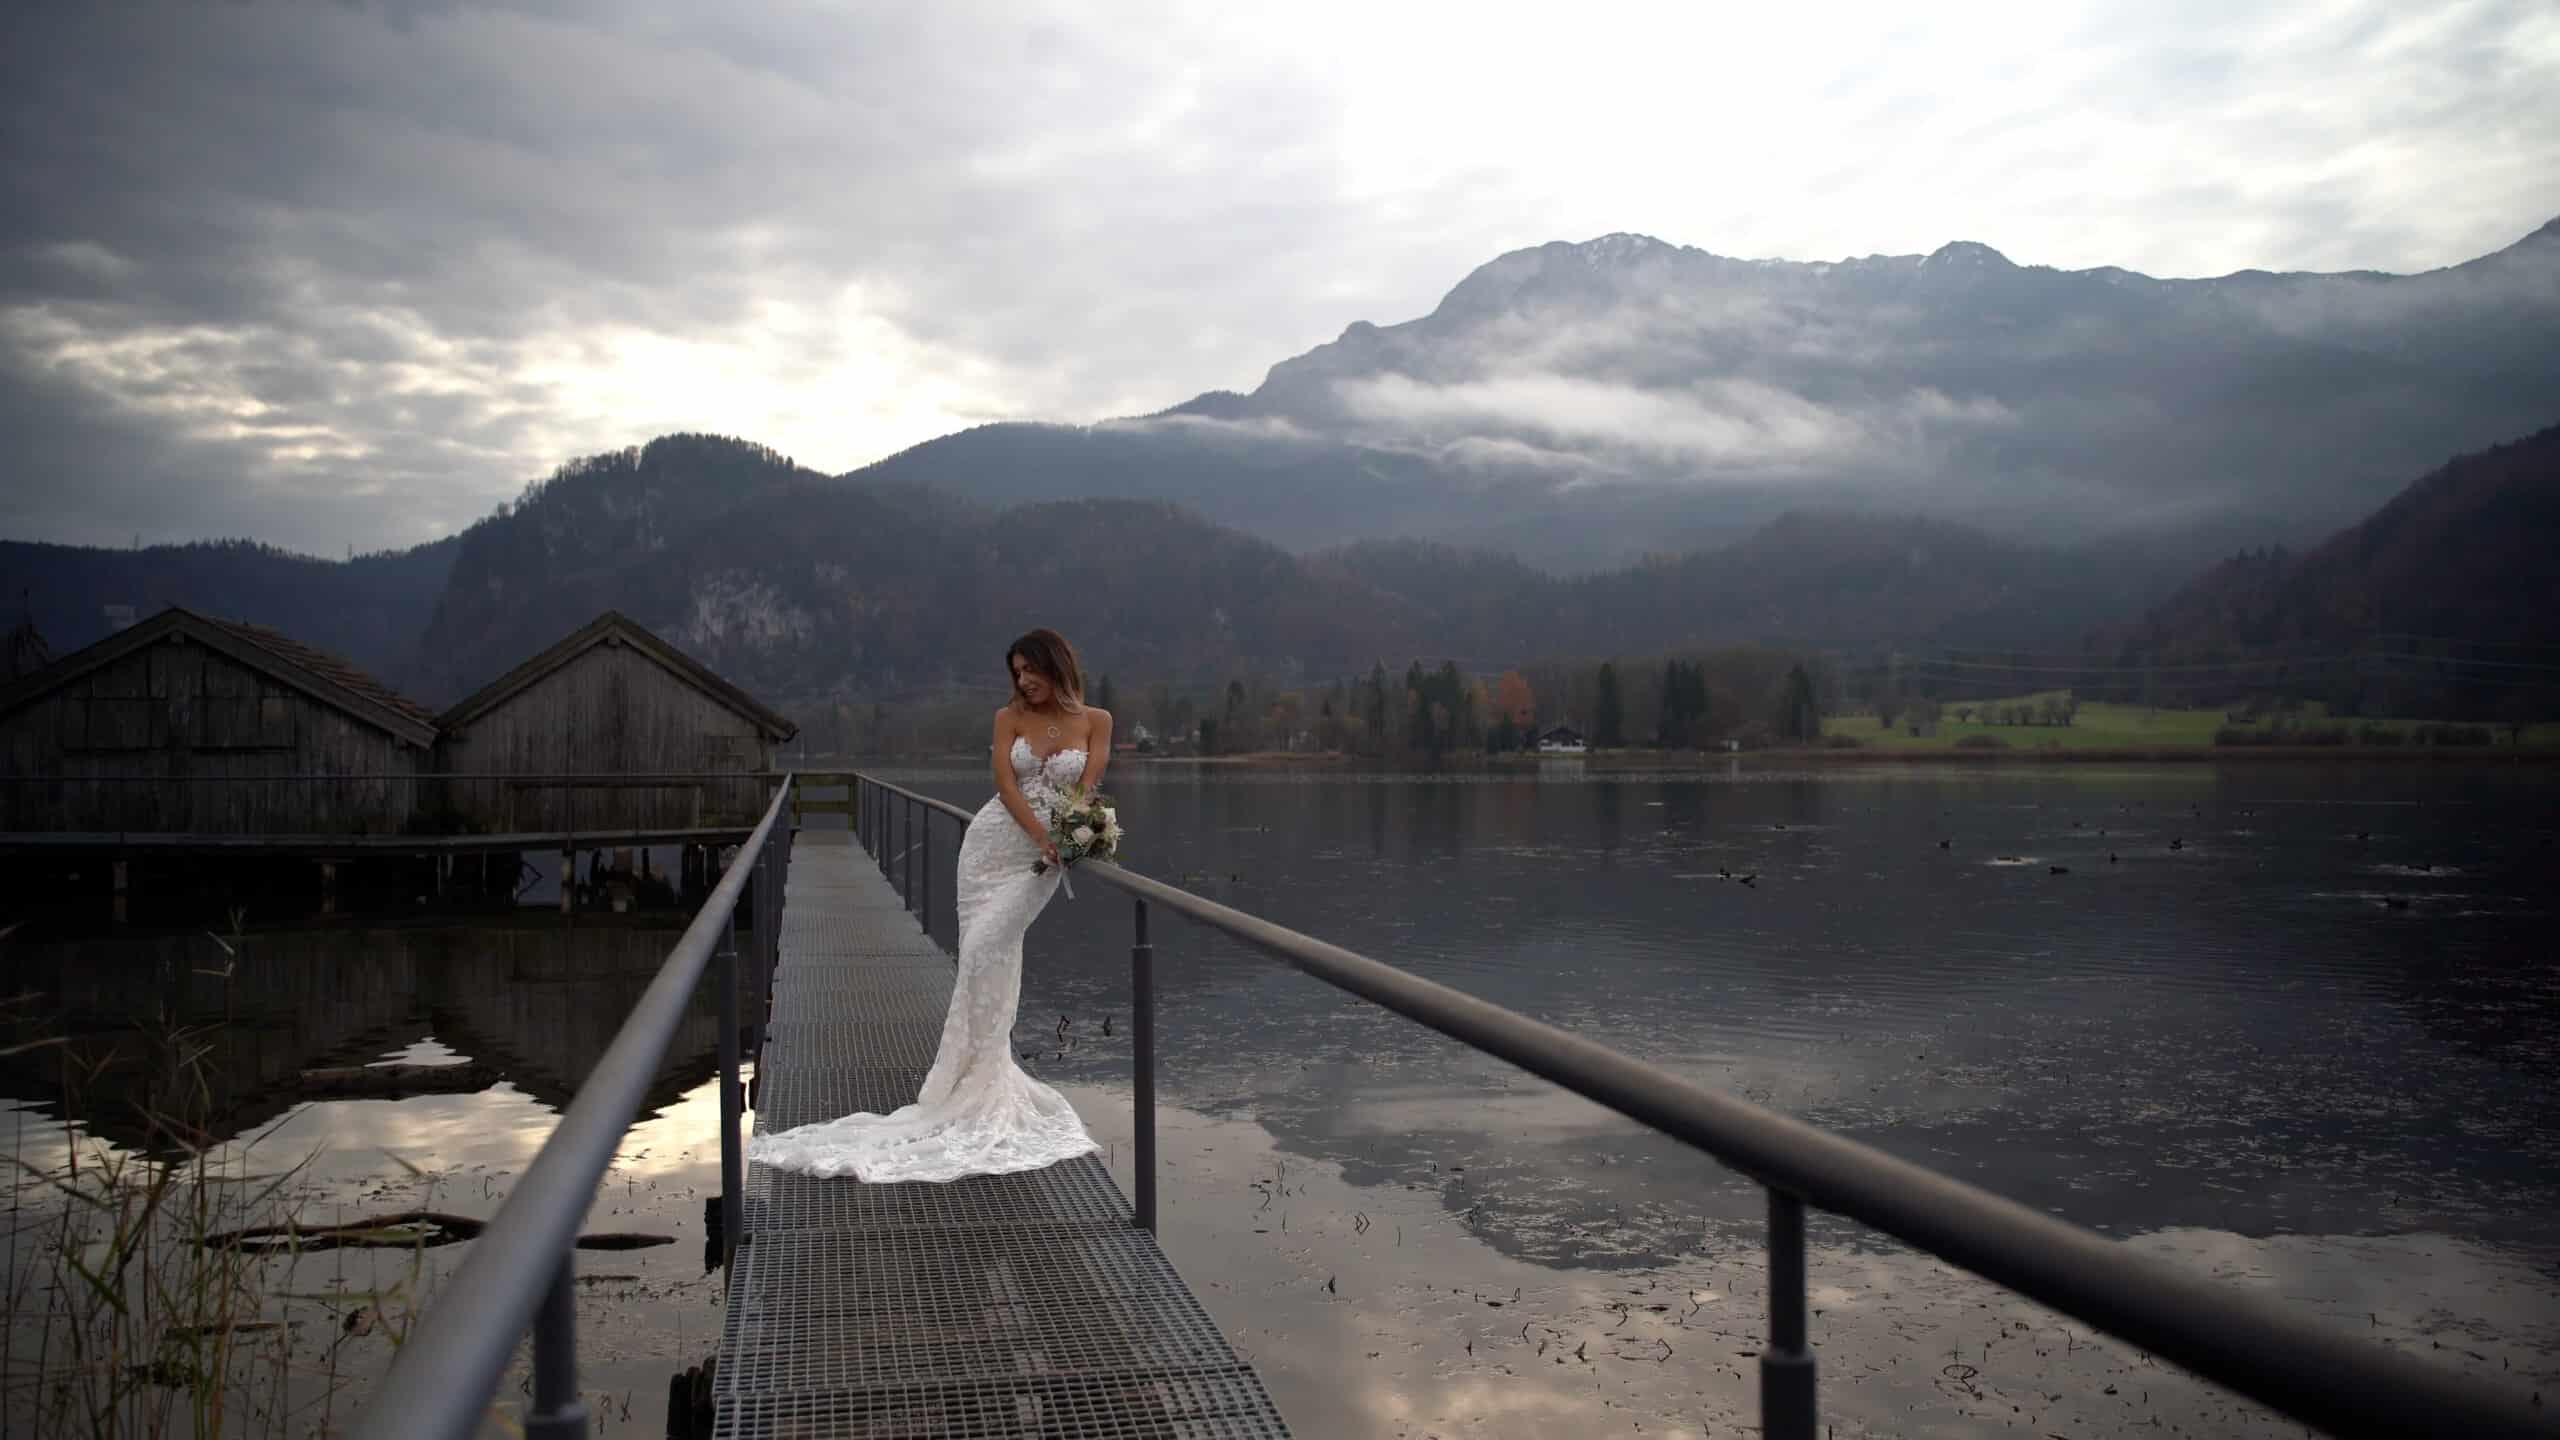 styled wedding shoot at kochelsee bavaria